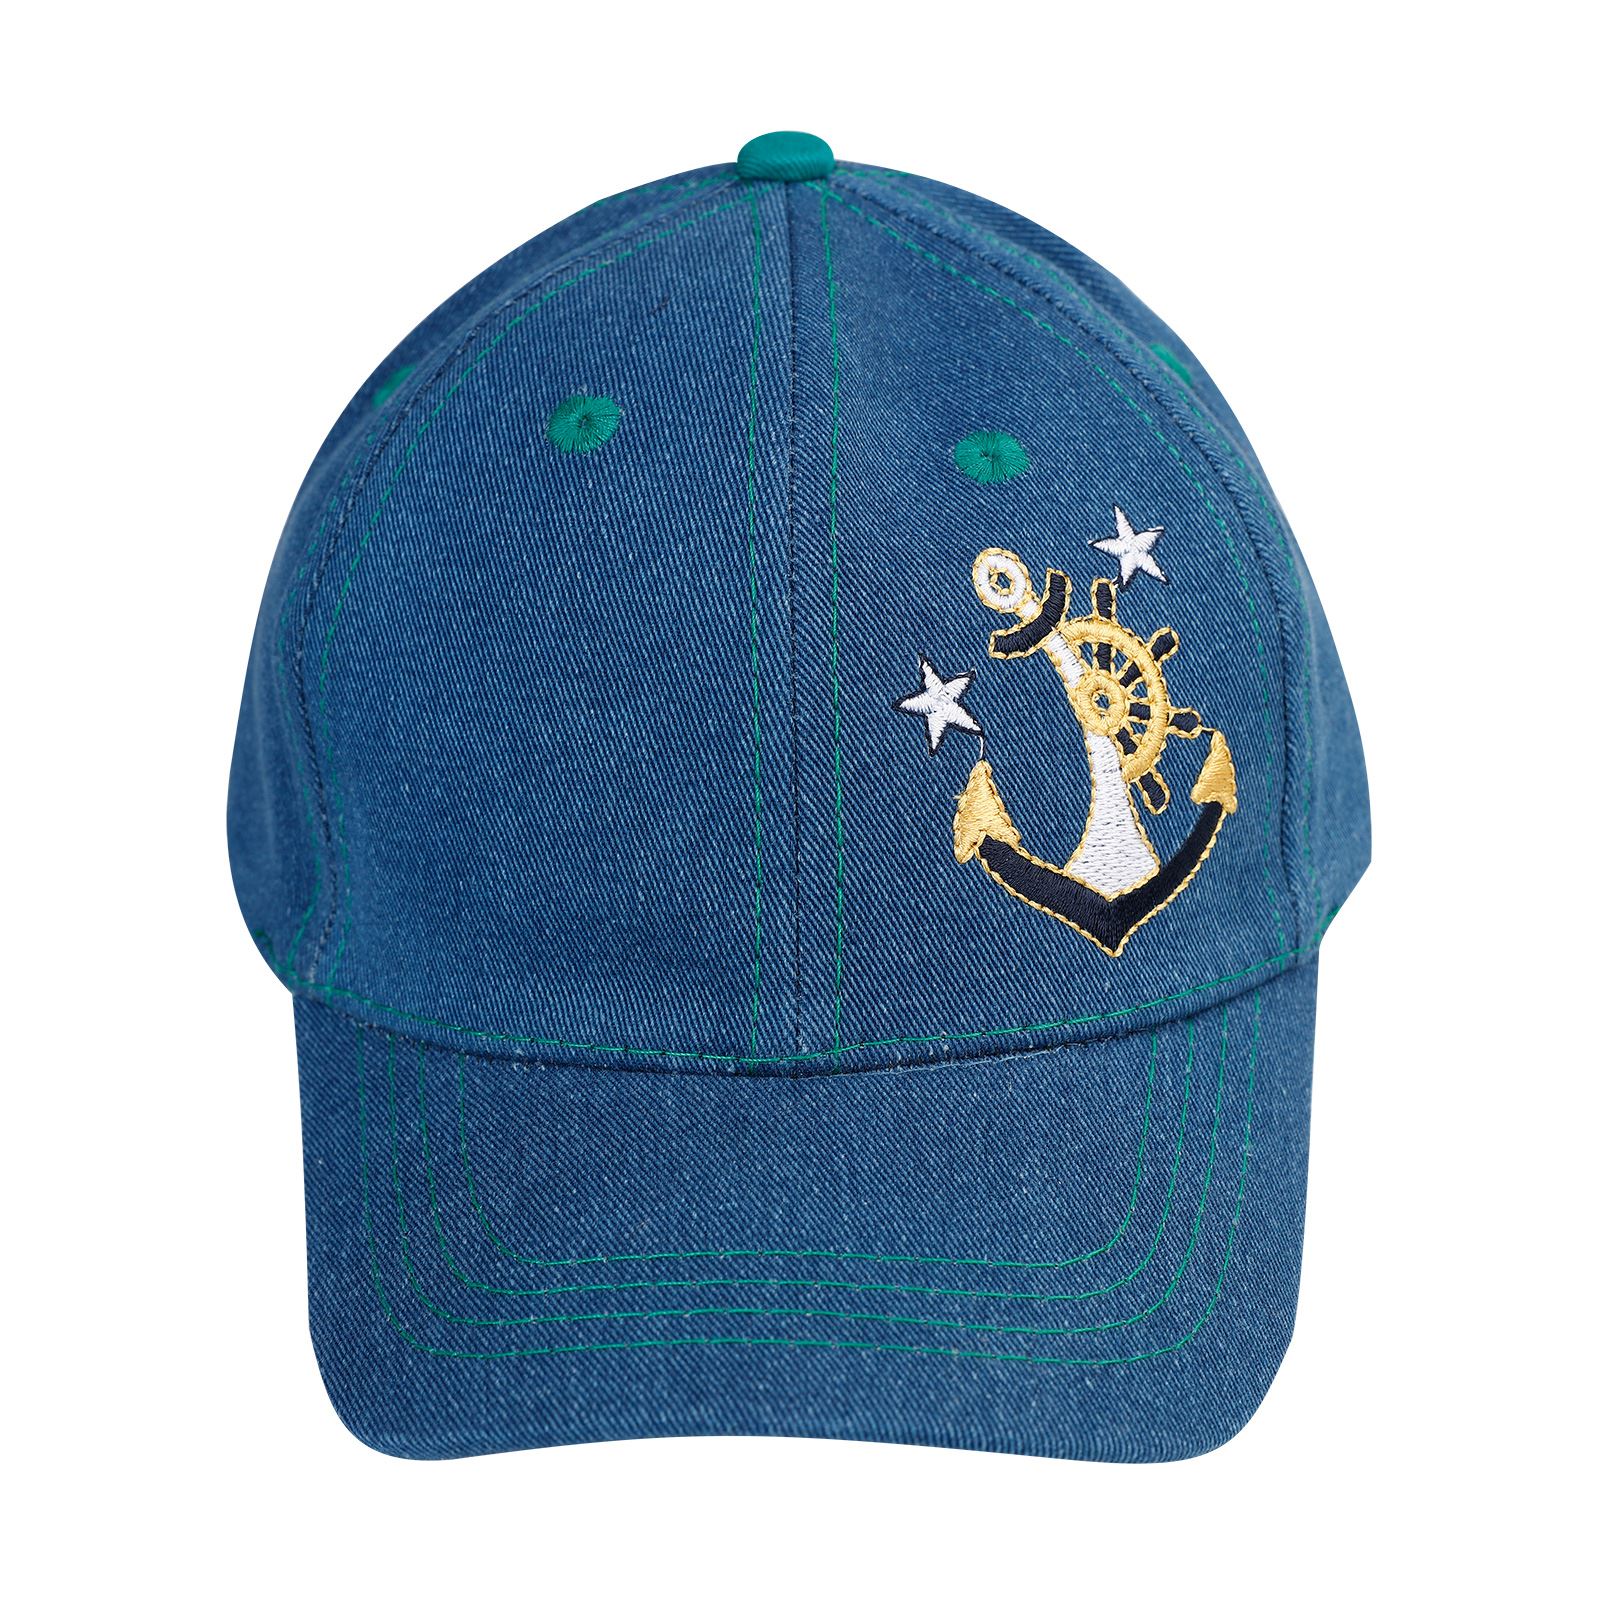 Tidi Erkek Çocuk Kep Şapka 2-5 Yaş Yeşil